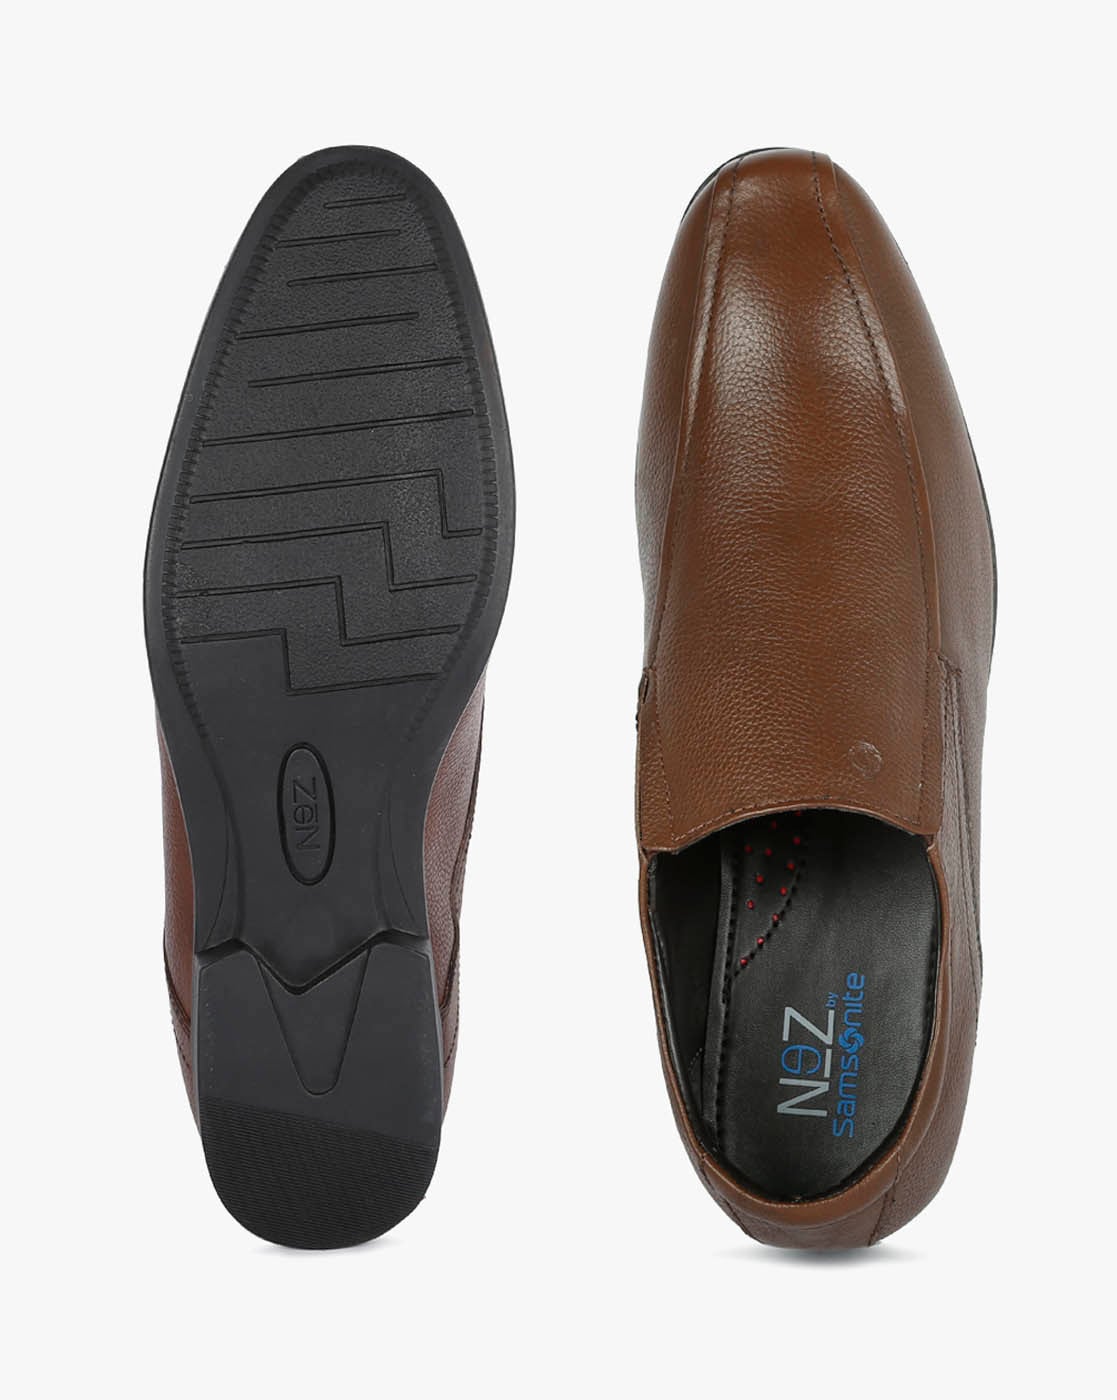 Nez by Samsonite Lace Up Shoes For Men - Buy Black Color Nez by Samsonite  Lace Up Shoes For Men Online at Best Price - Shop Online for Footwears in  India | Flipkart.com